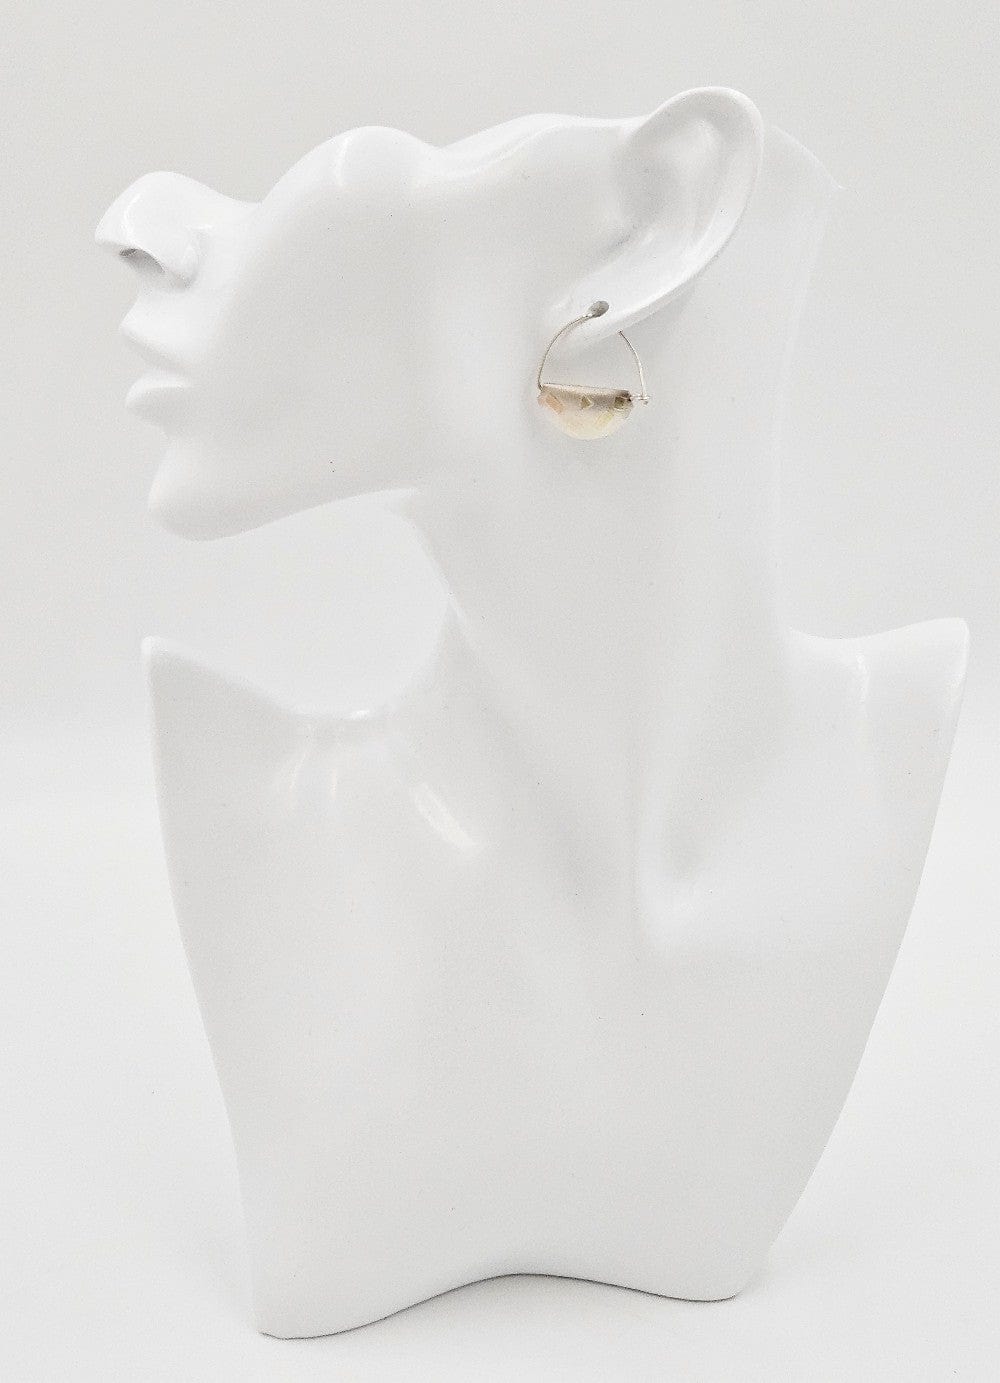 CG Jewelry Superb Designer Signed Sterling Silver & 18k Modernist Necklace Earrings SET